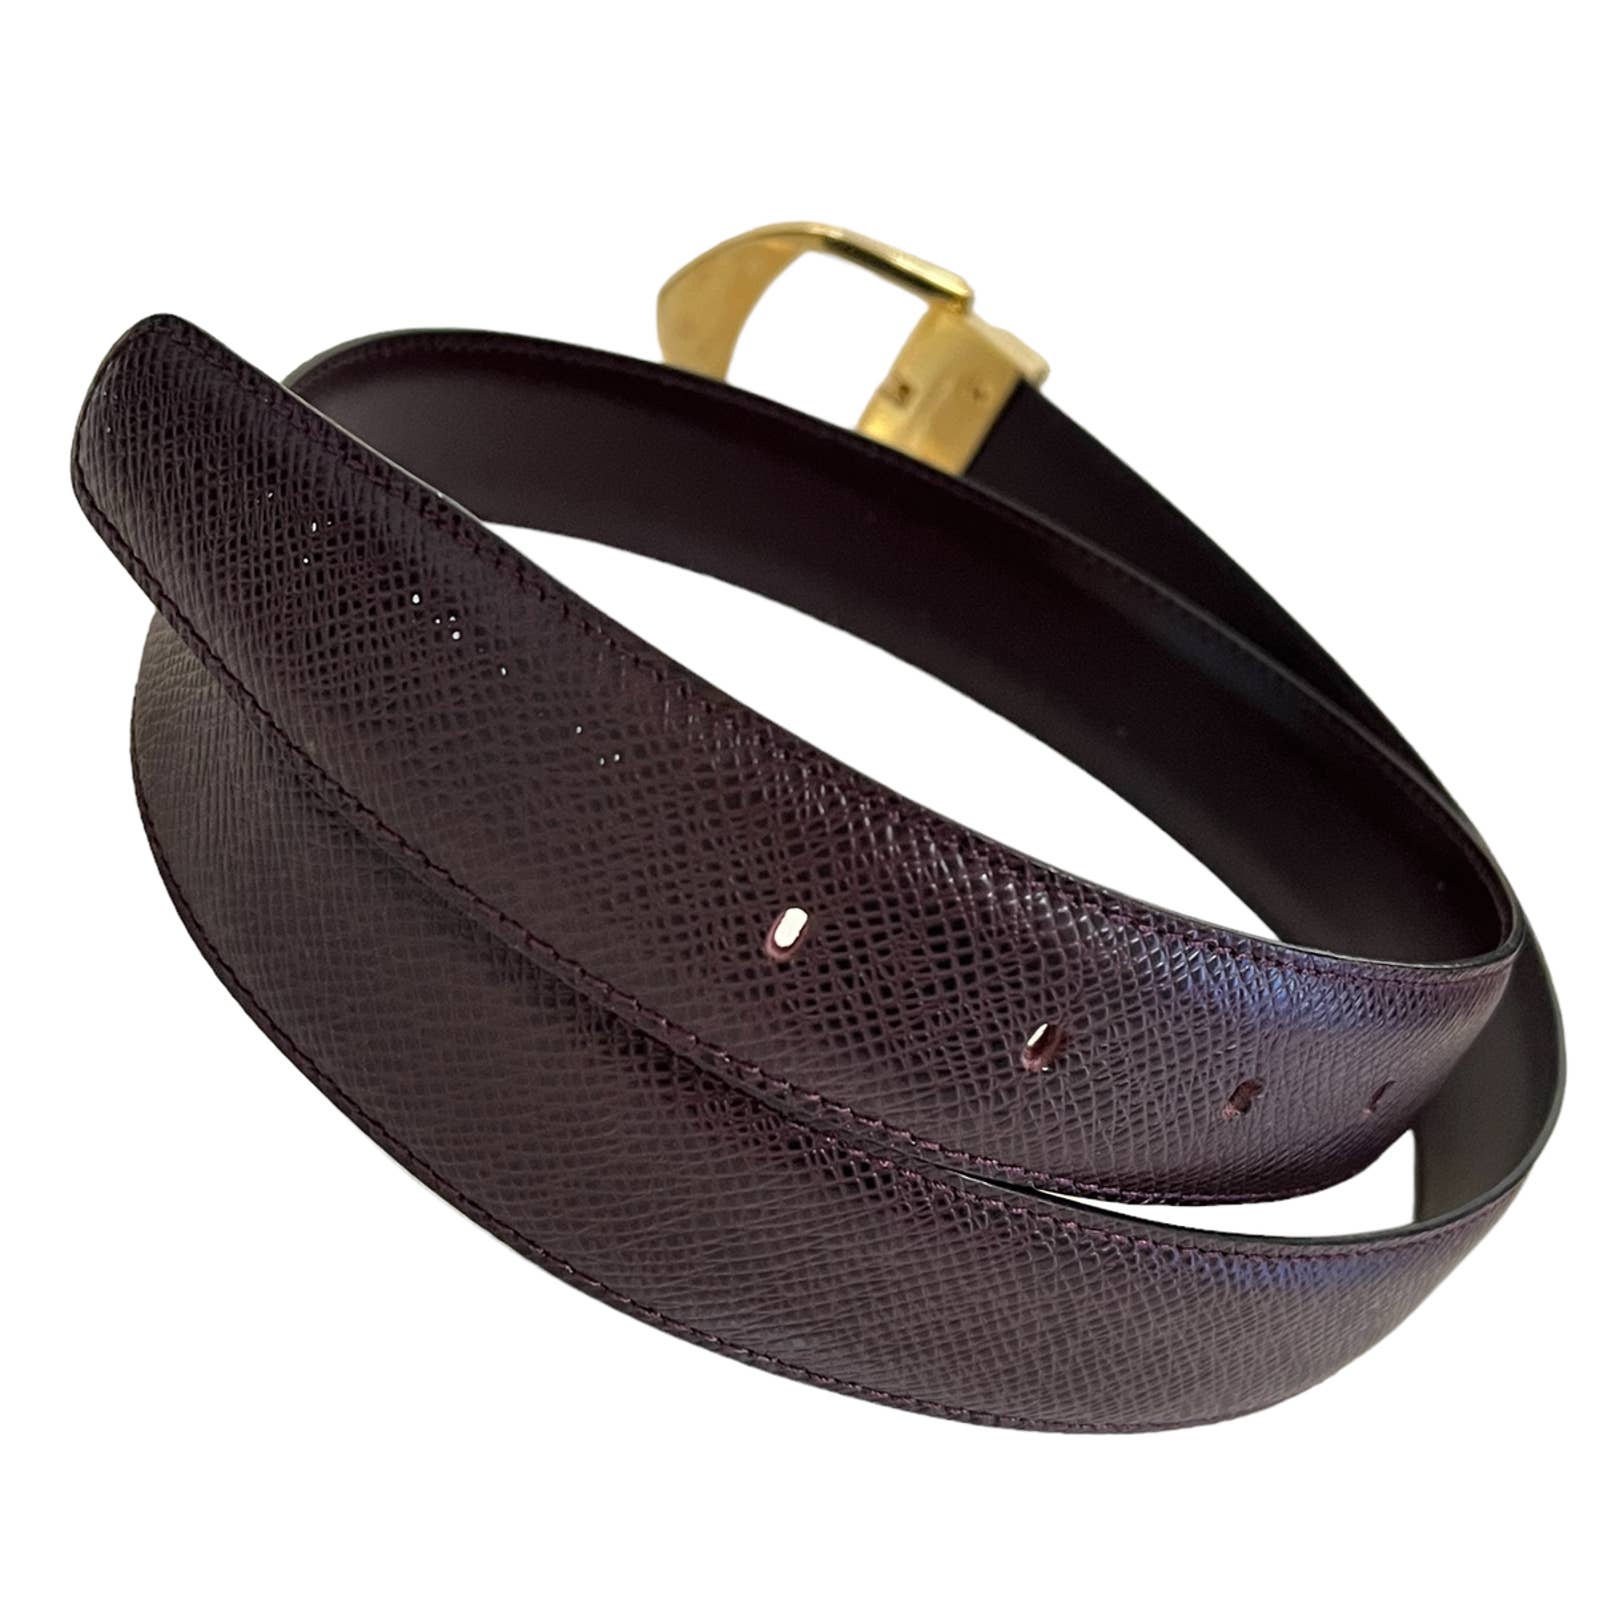 Louis Vuitton Vintage 2003 Waist Belt